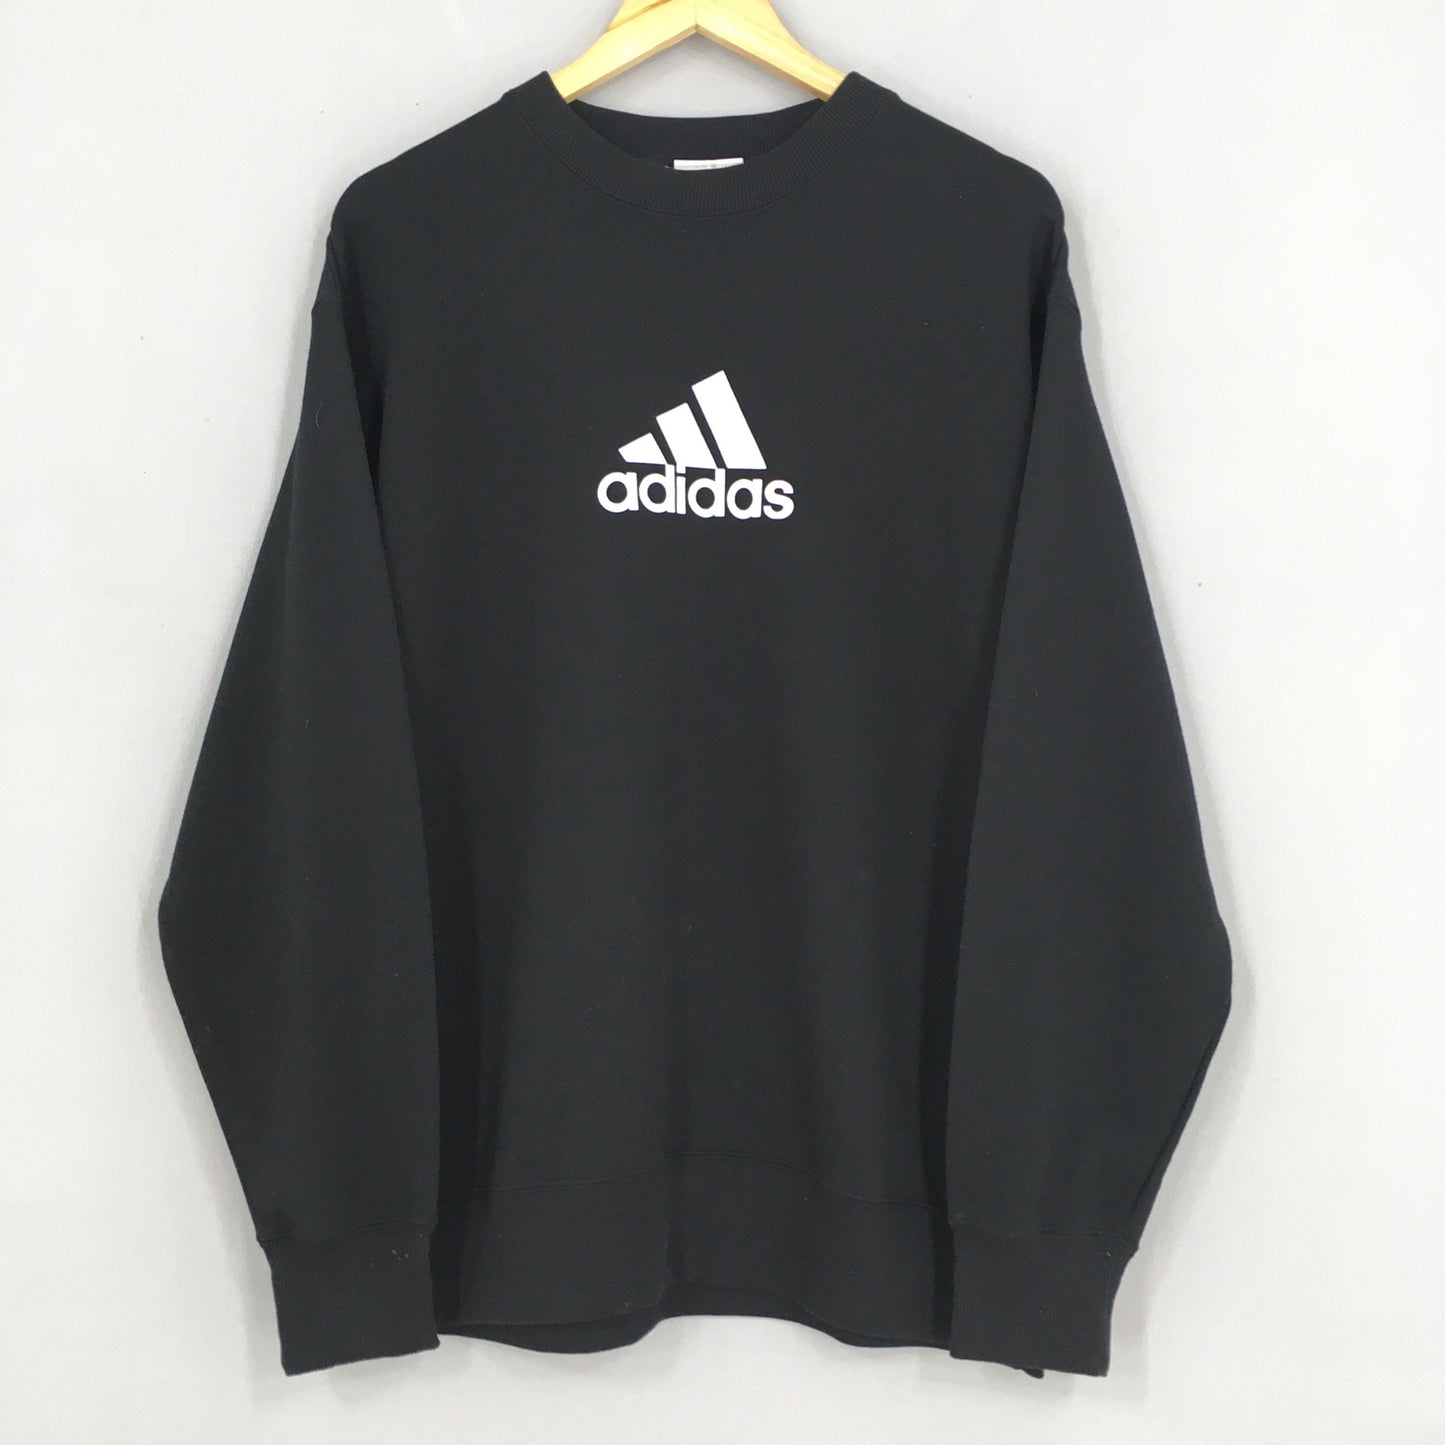 Adidas Equipment Black Sweater Large